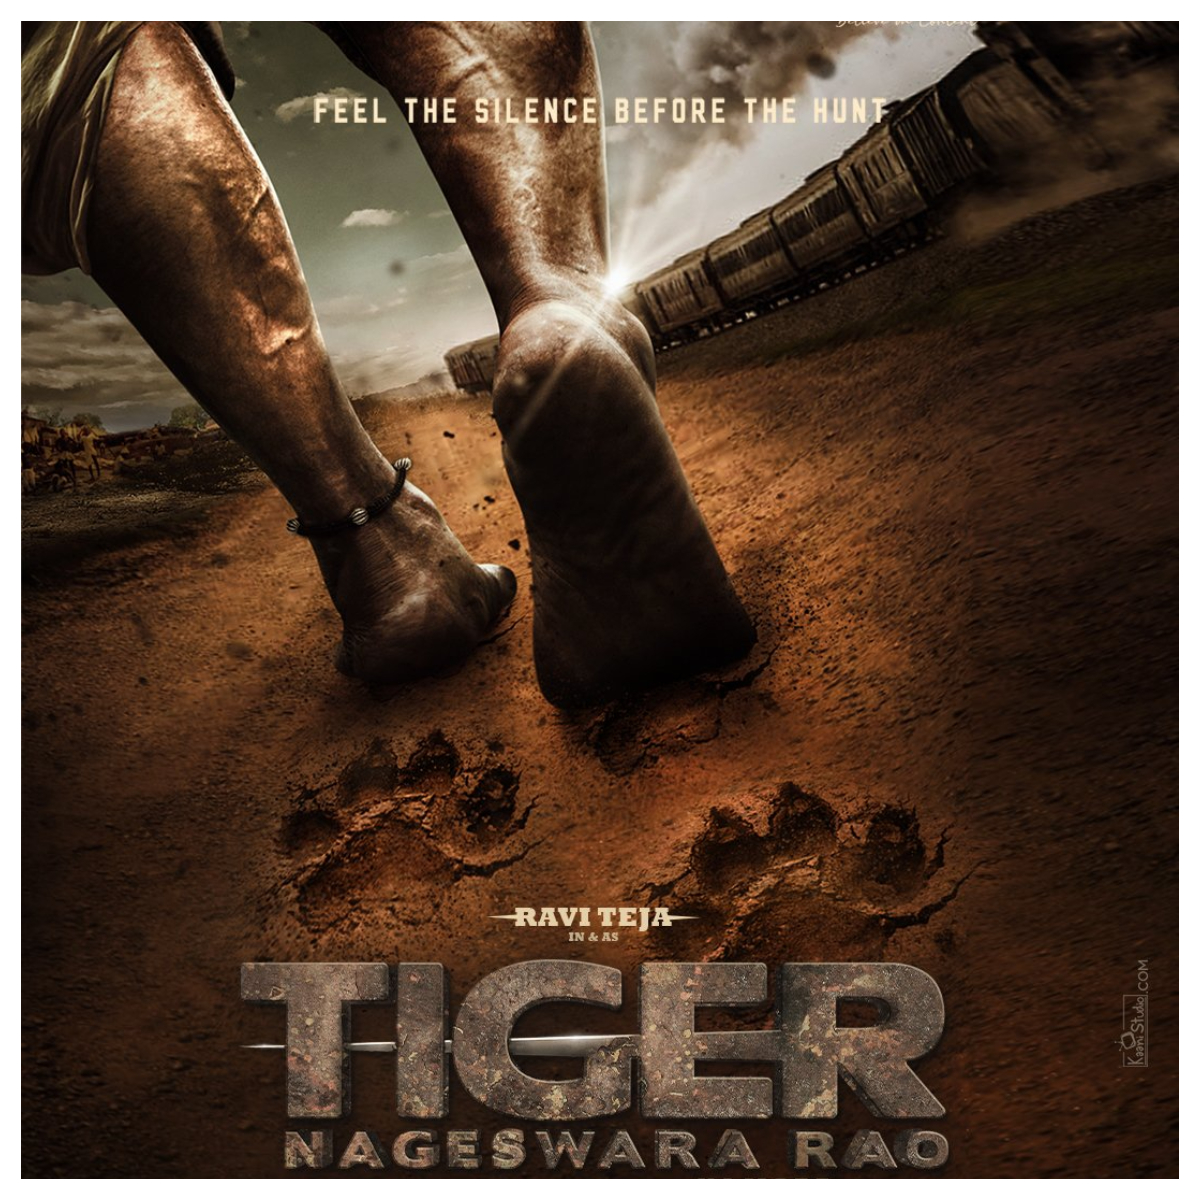 Ravi Teja announces his first pan Indian film titled Tiger Nageswara Rao; Poster looks promising